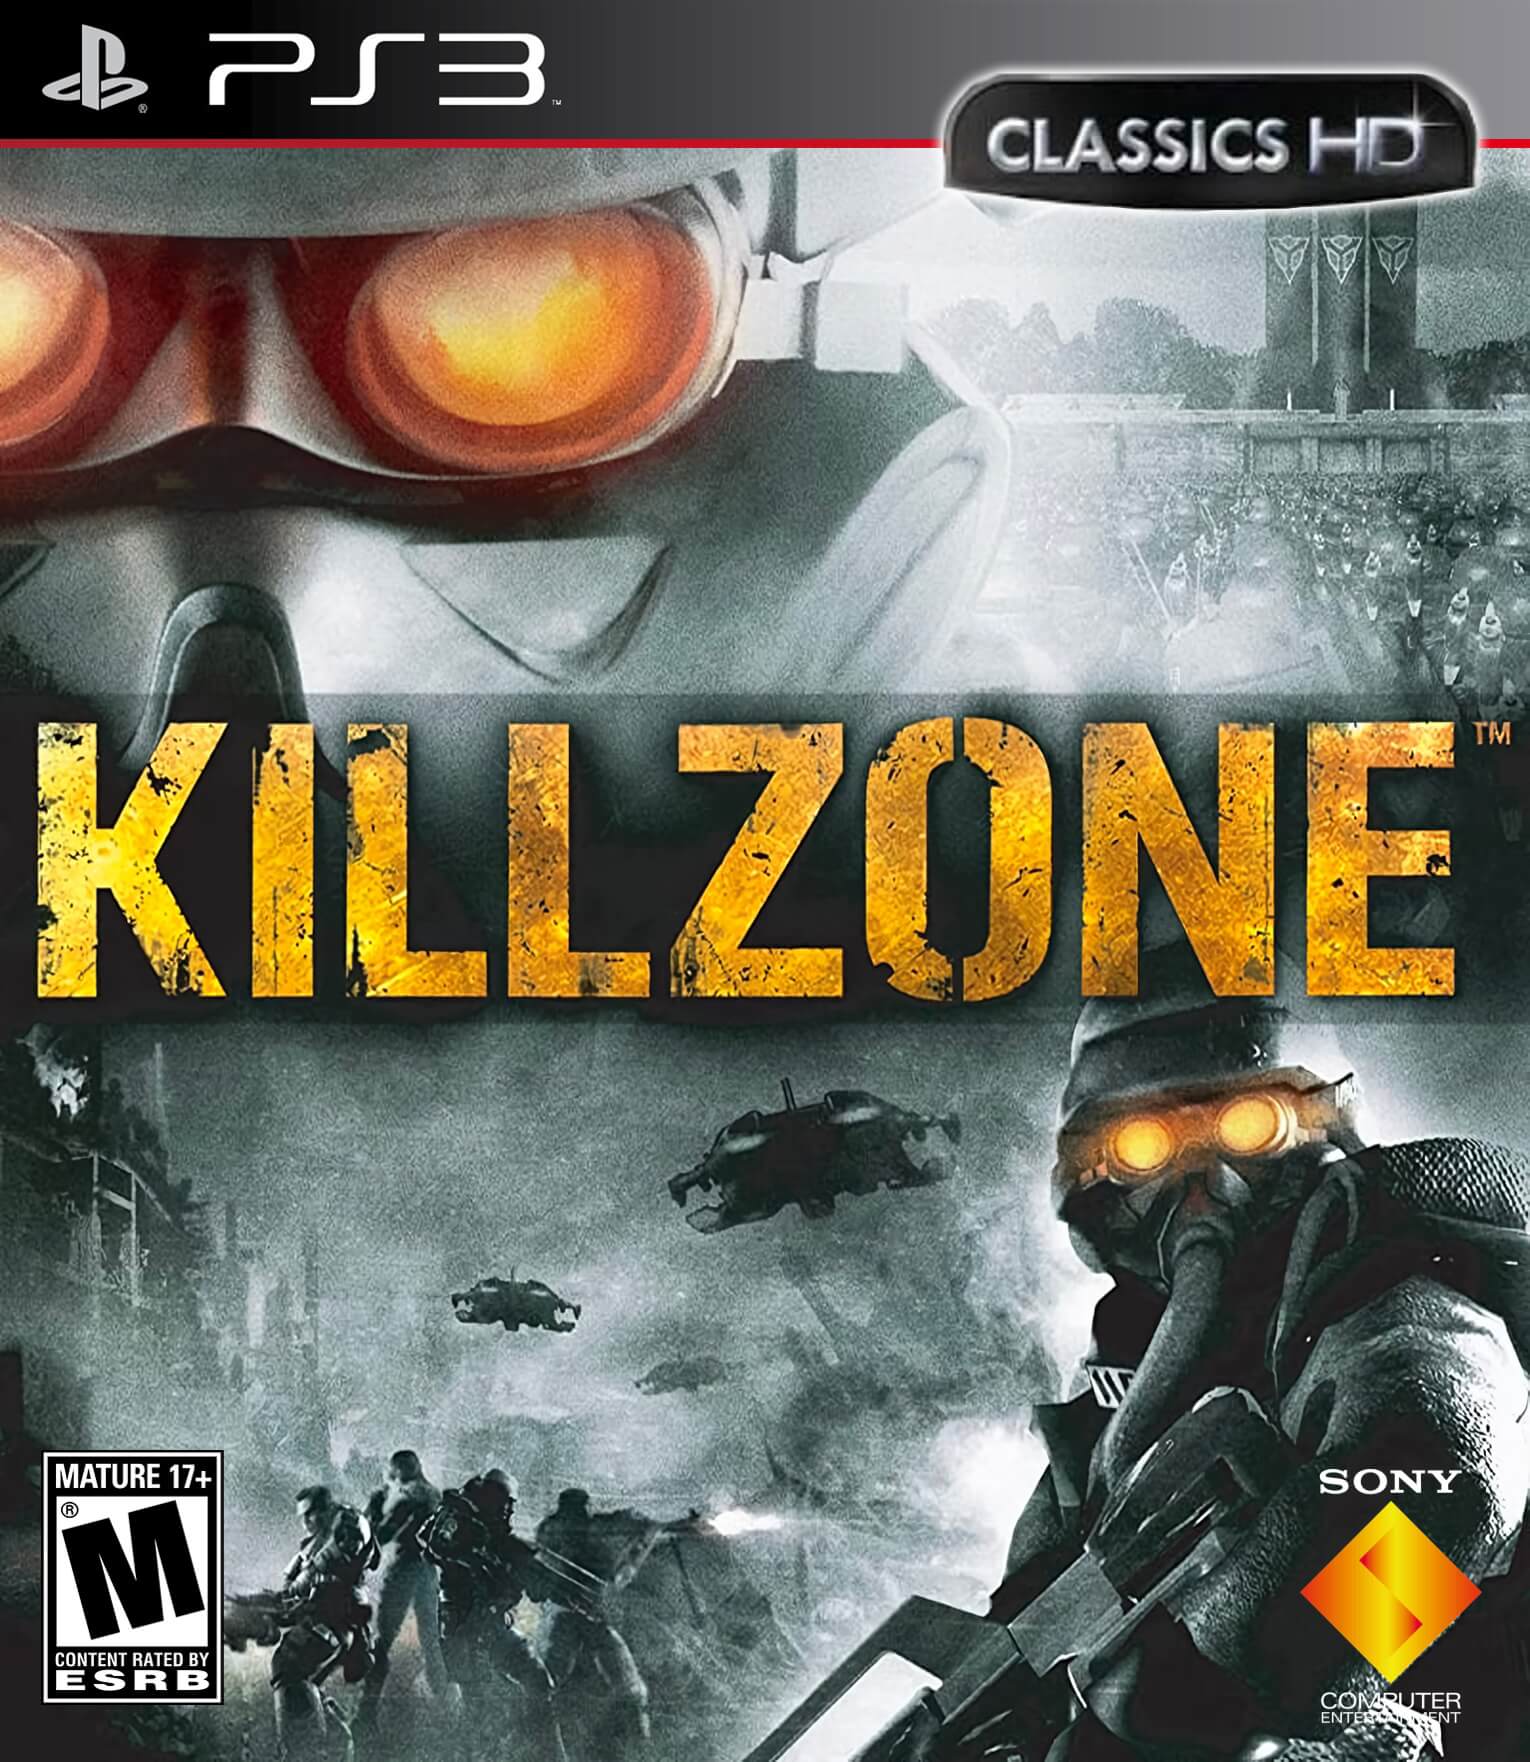 The plot thickens in 'Killzone 3